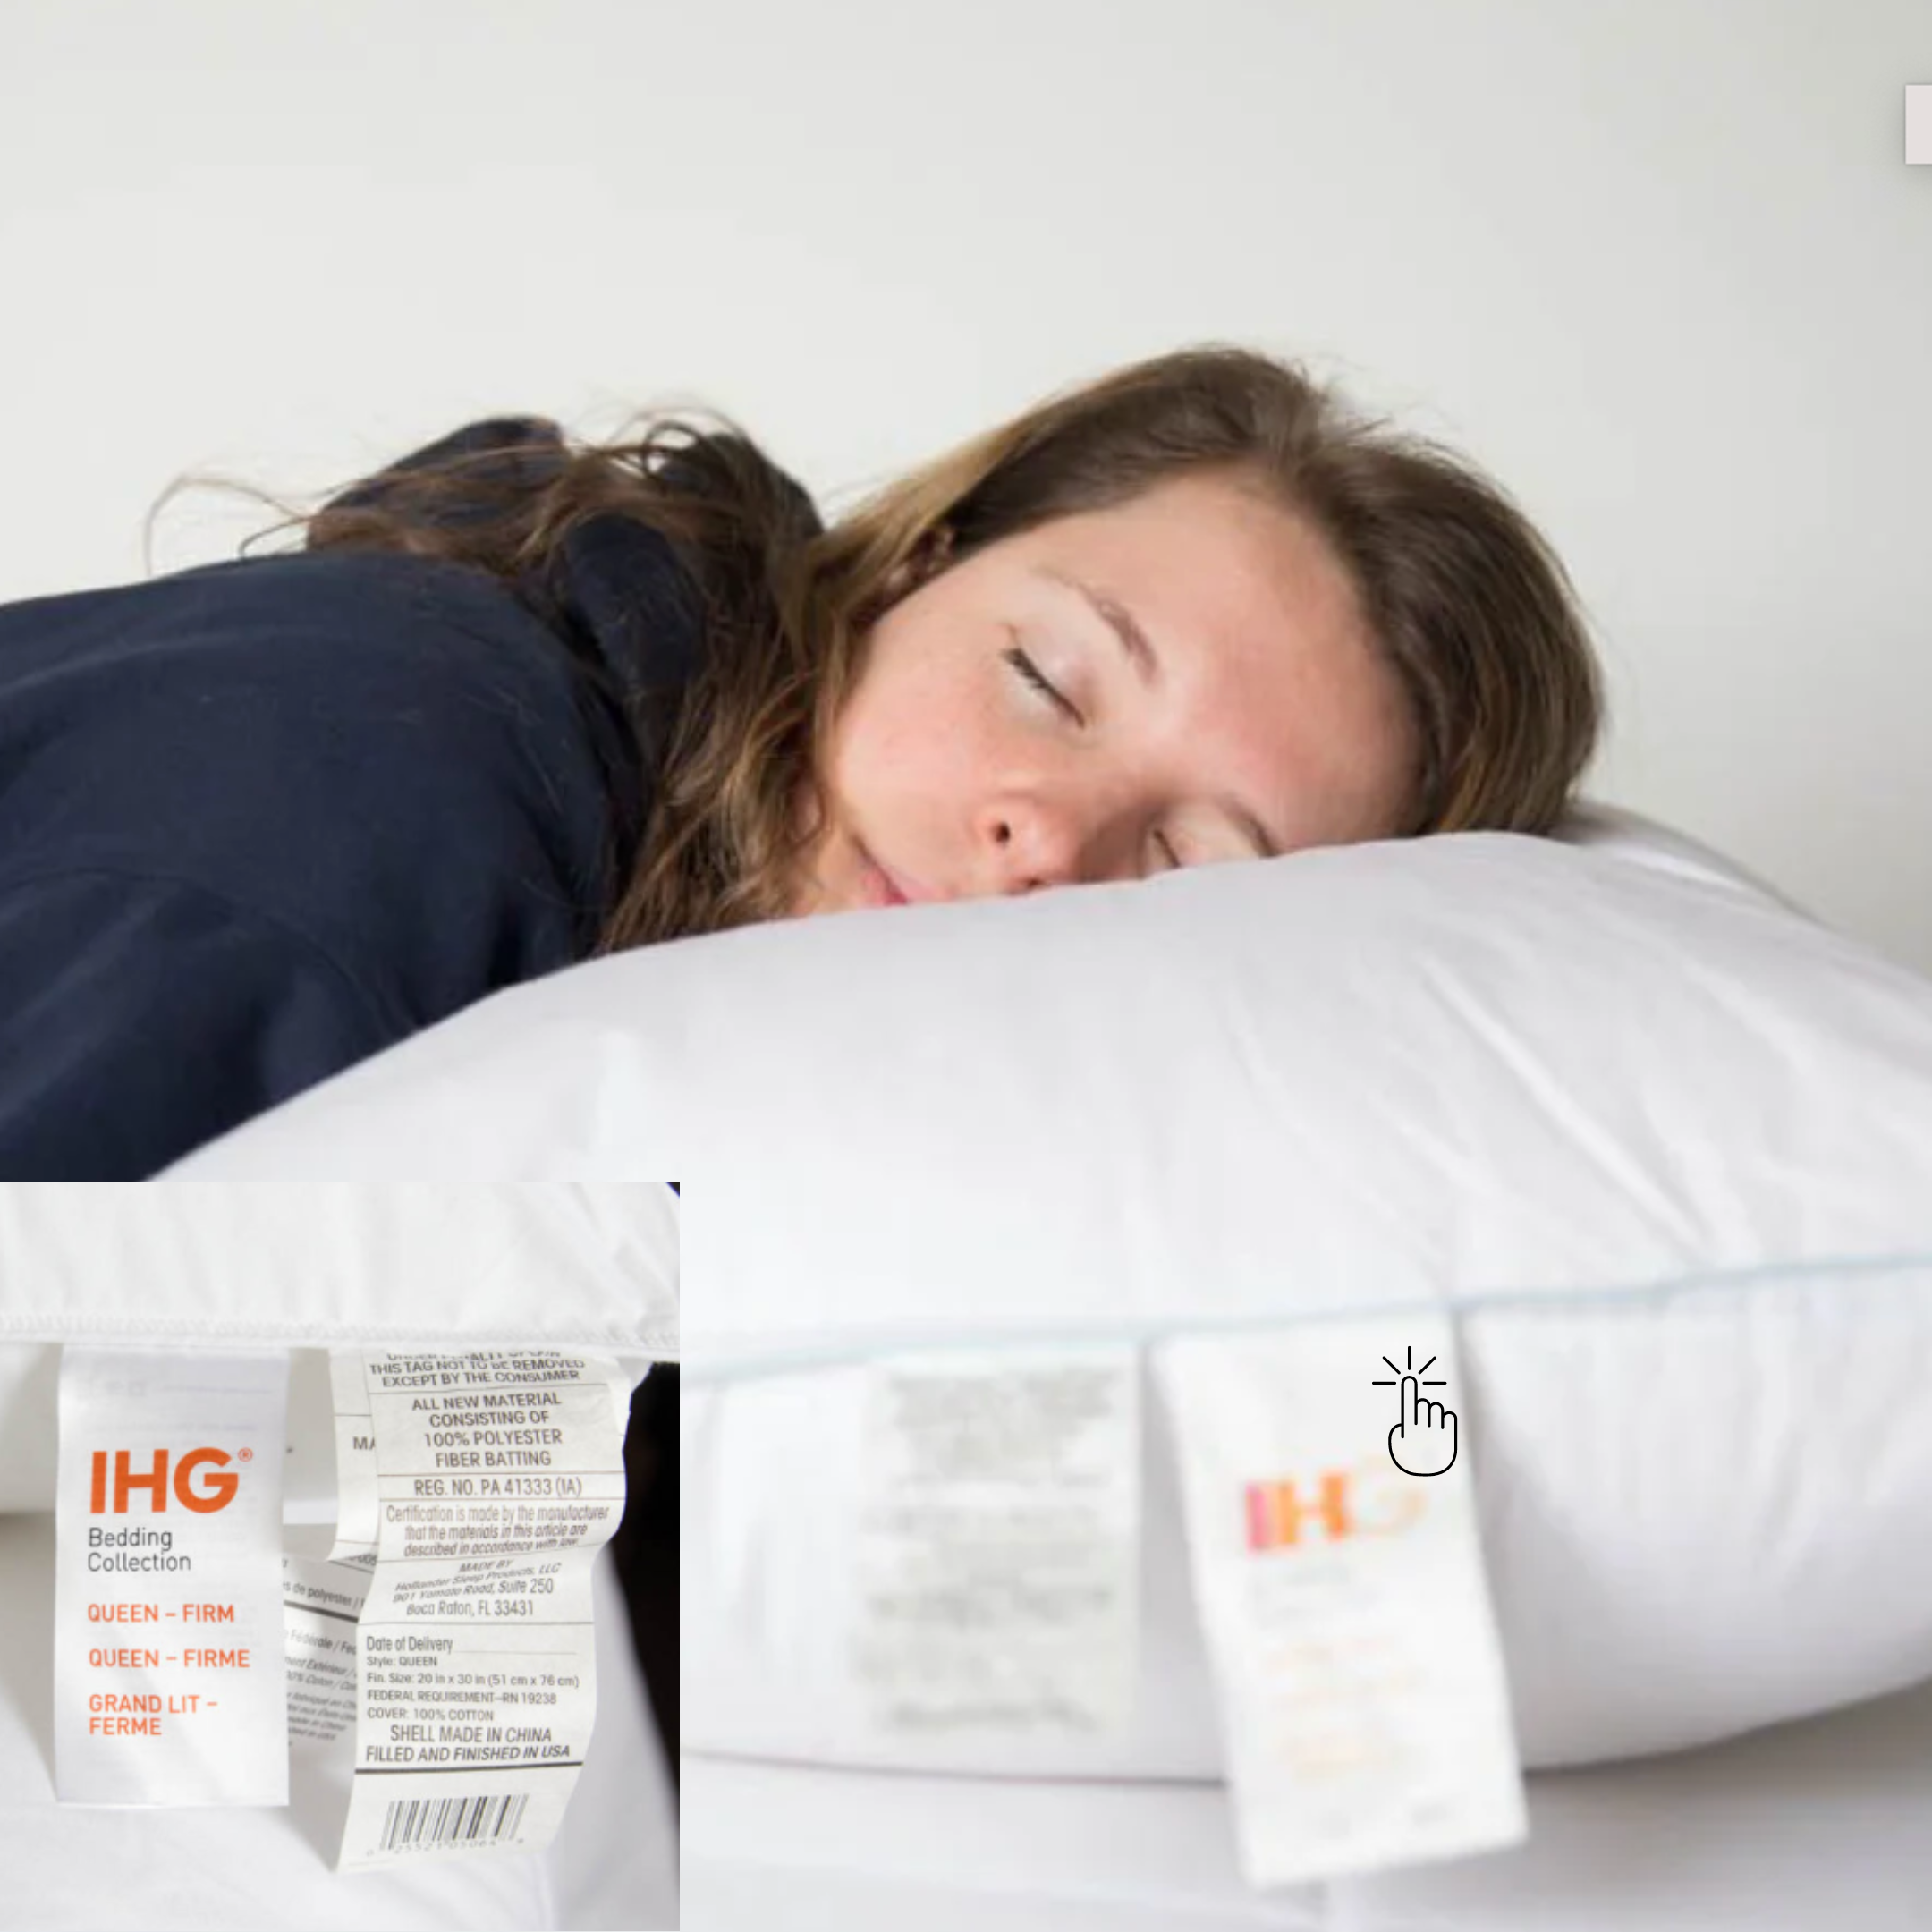 IHG bedding collection